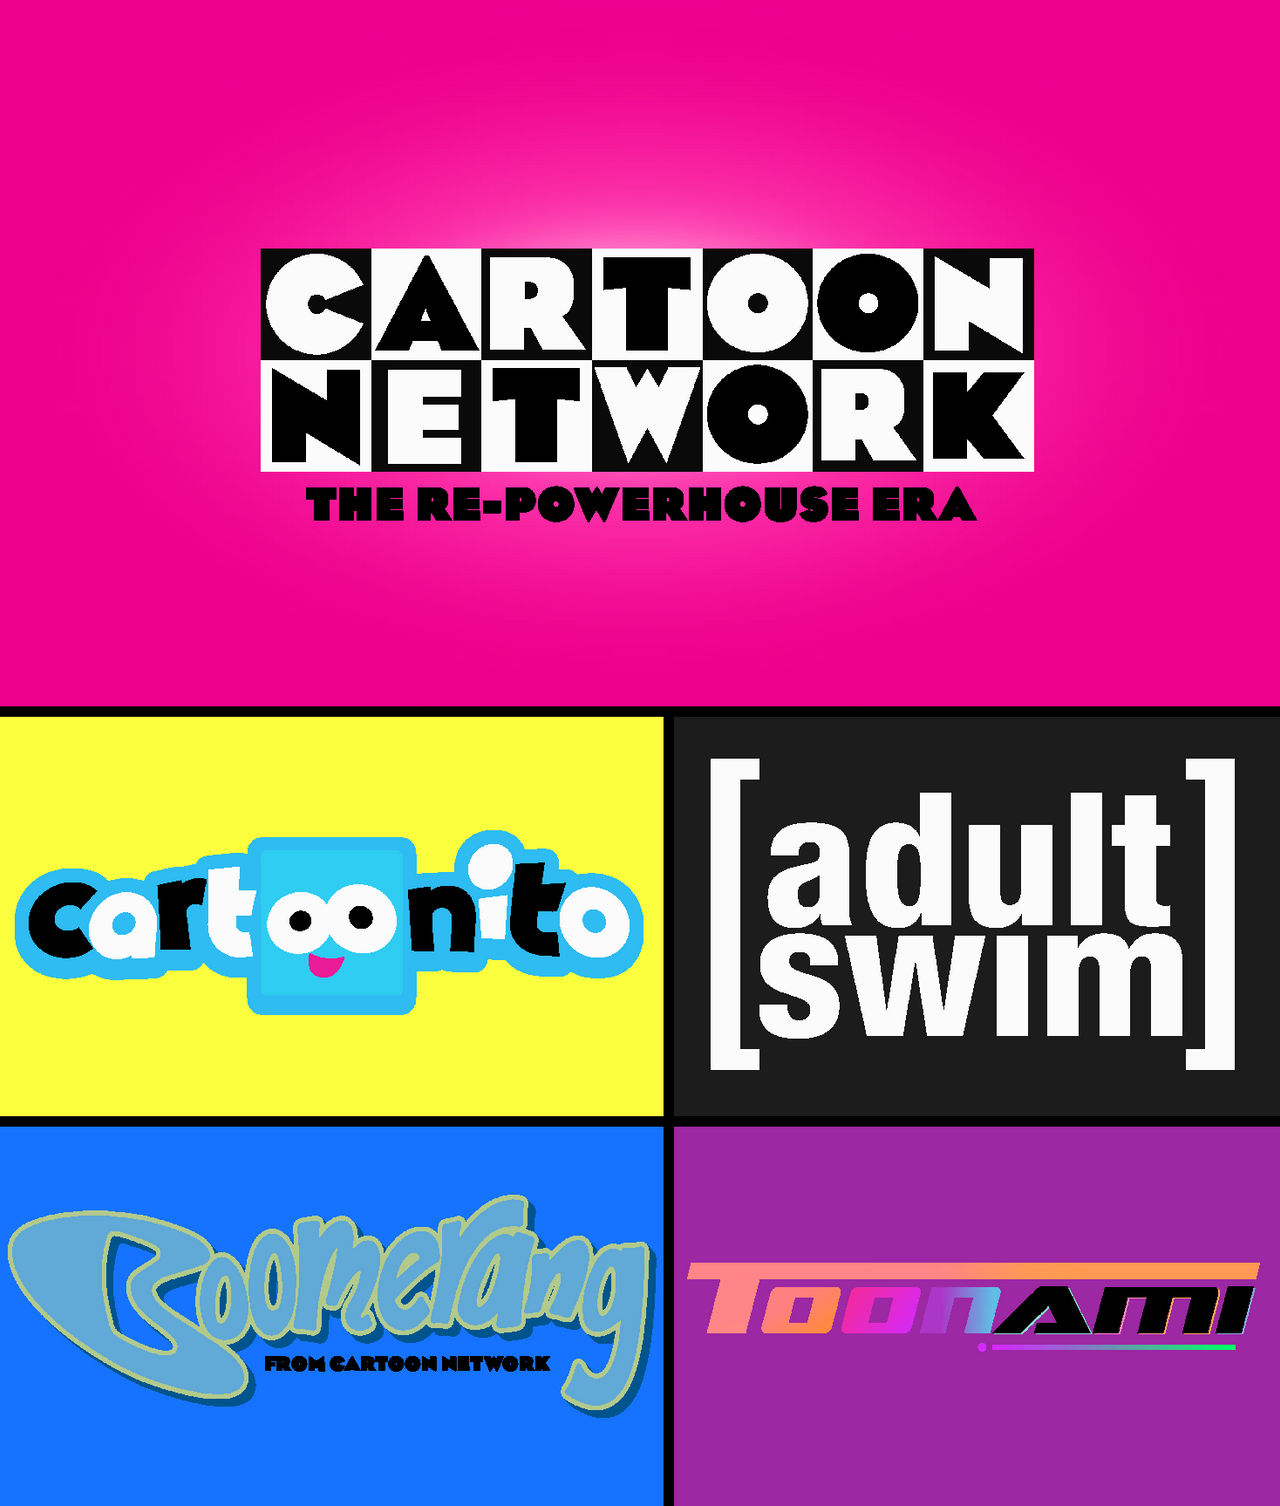 Cartoon Network falters in modern era